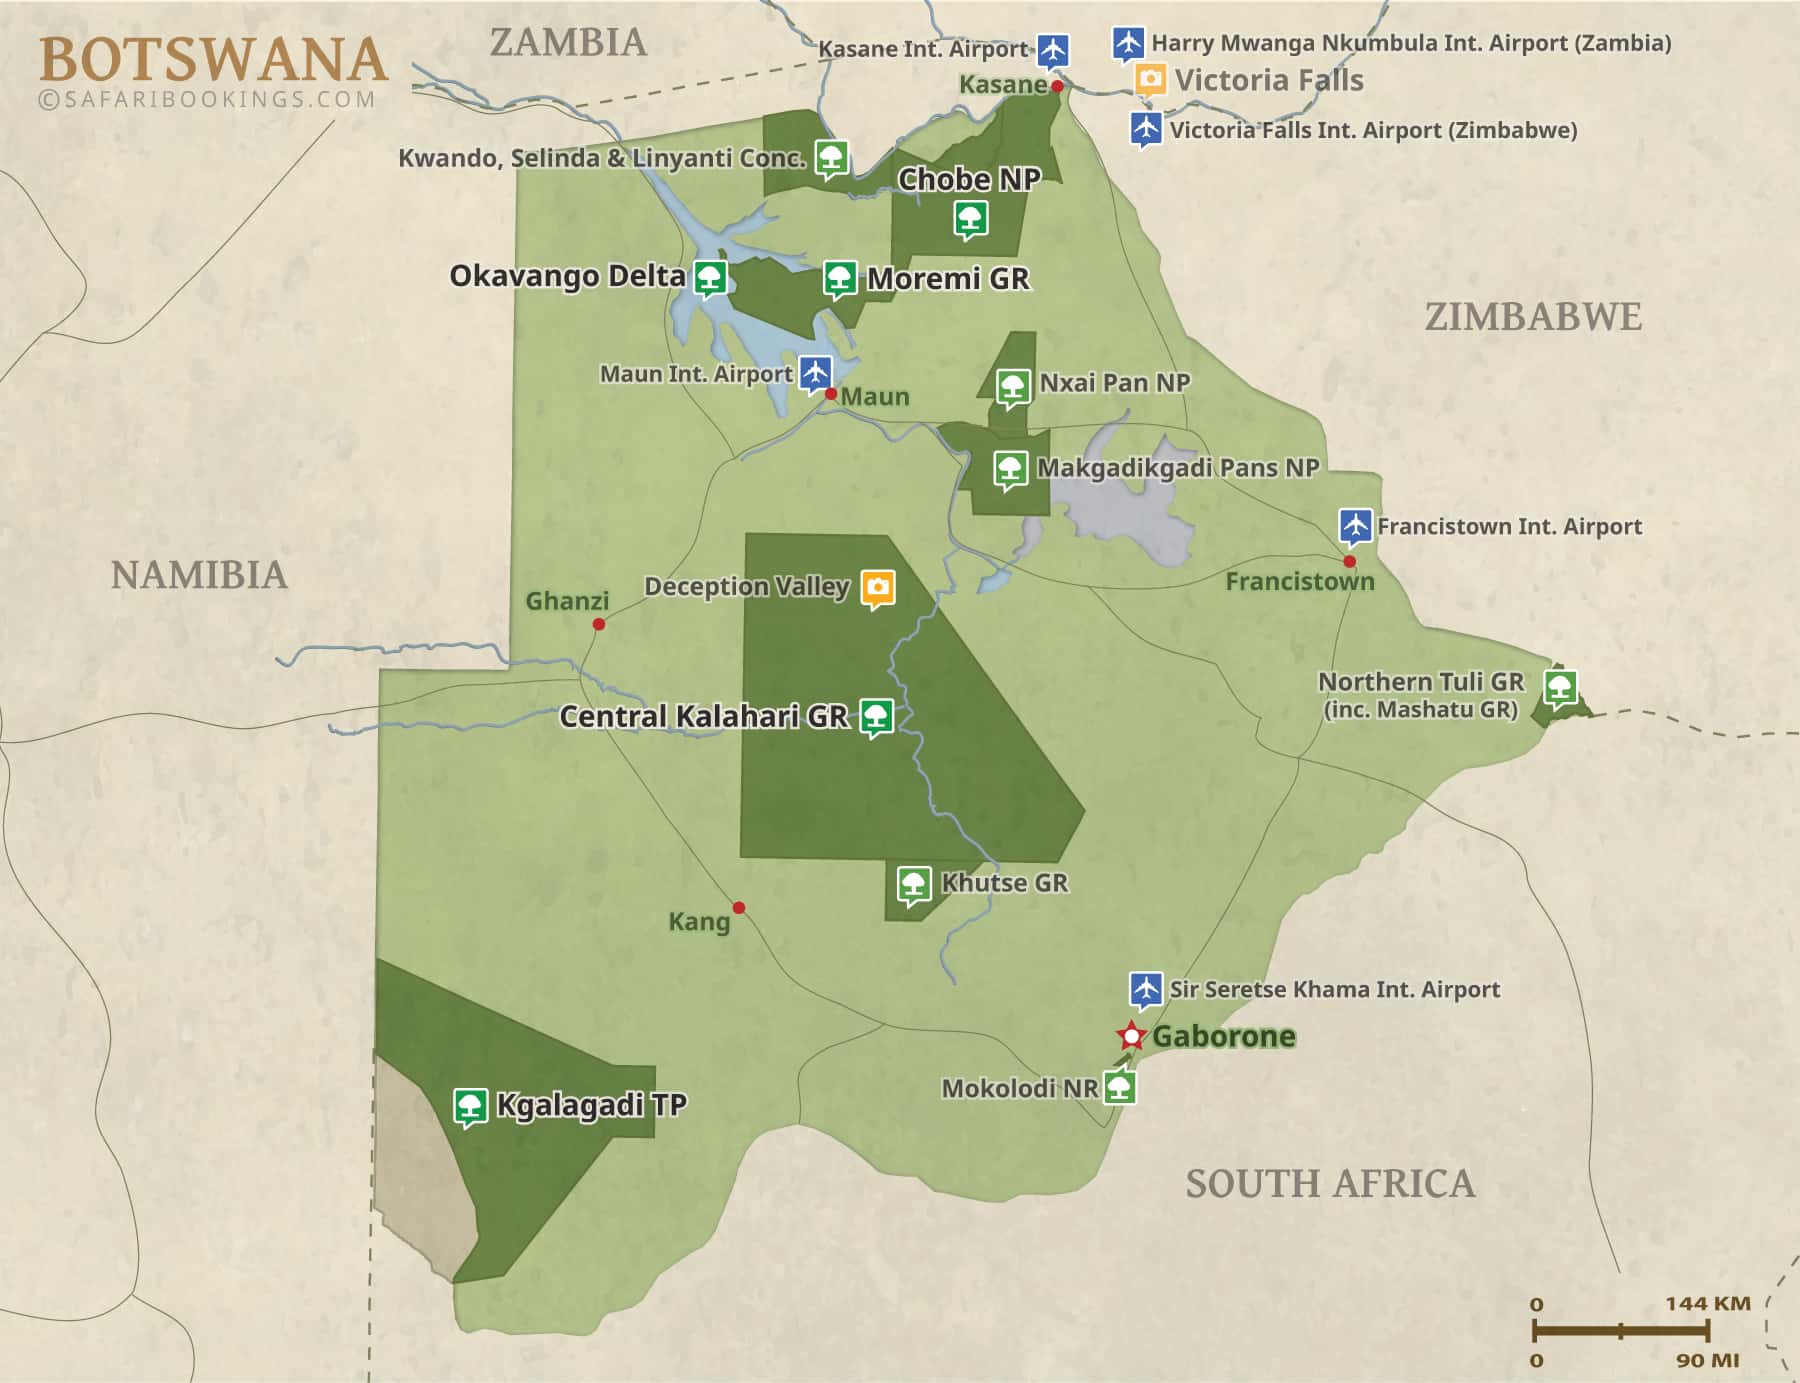 Detailed Map of Botswana National Parks